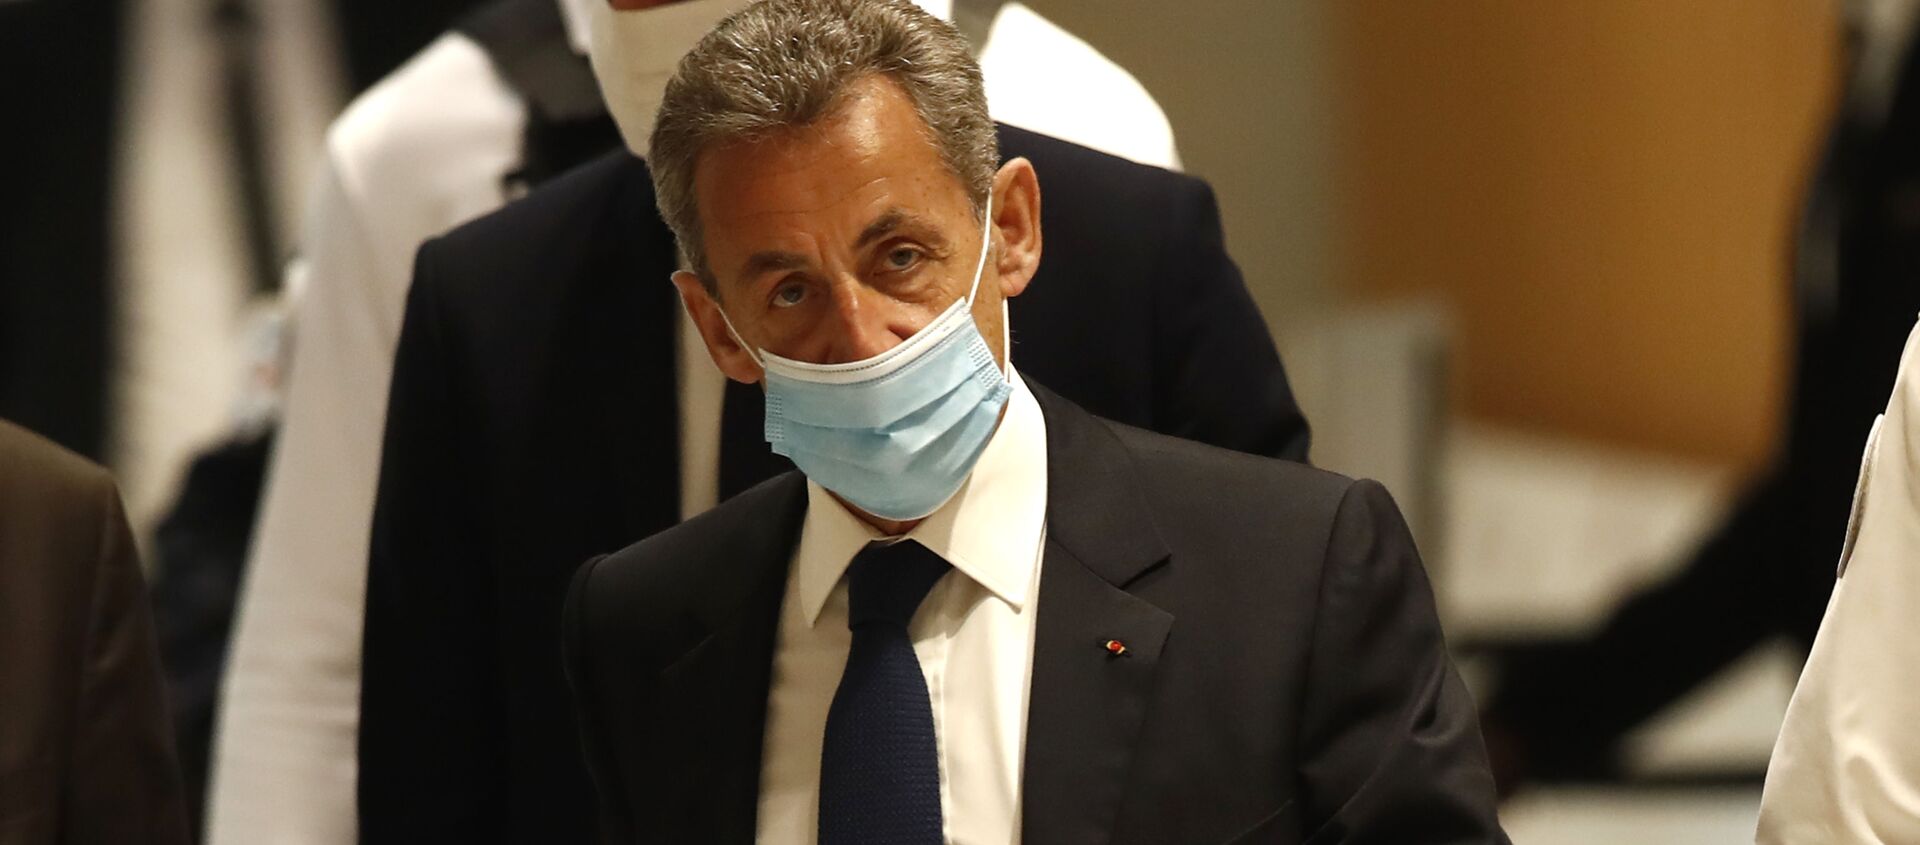 Бывший президент Франции Николя Саркози - Sputnik Таджикистан, 1920, 01.03.2021